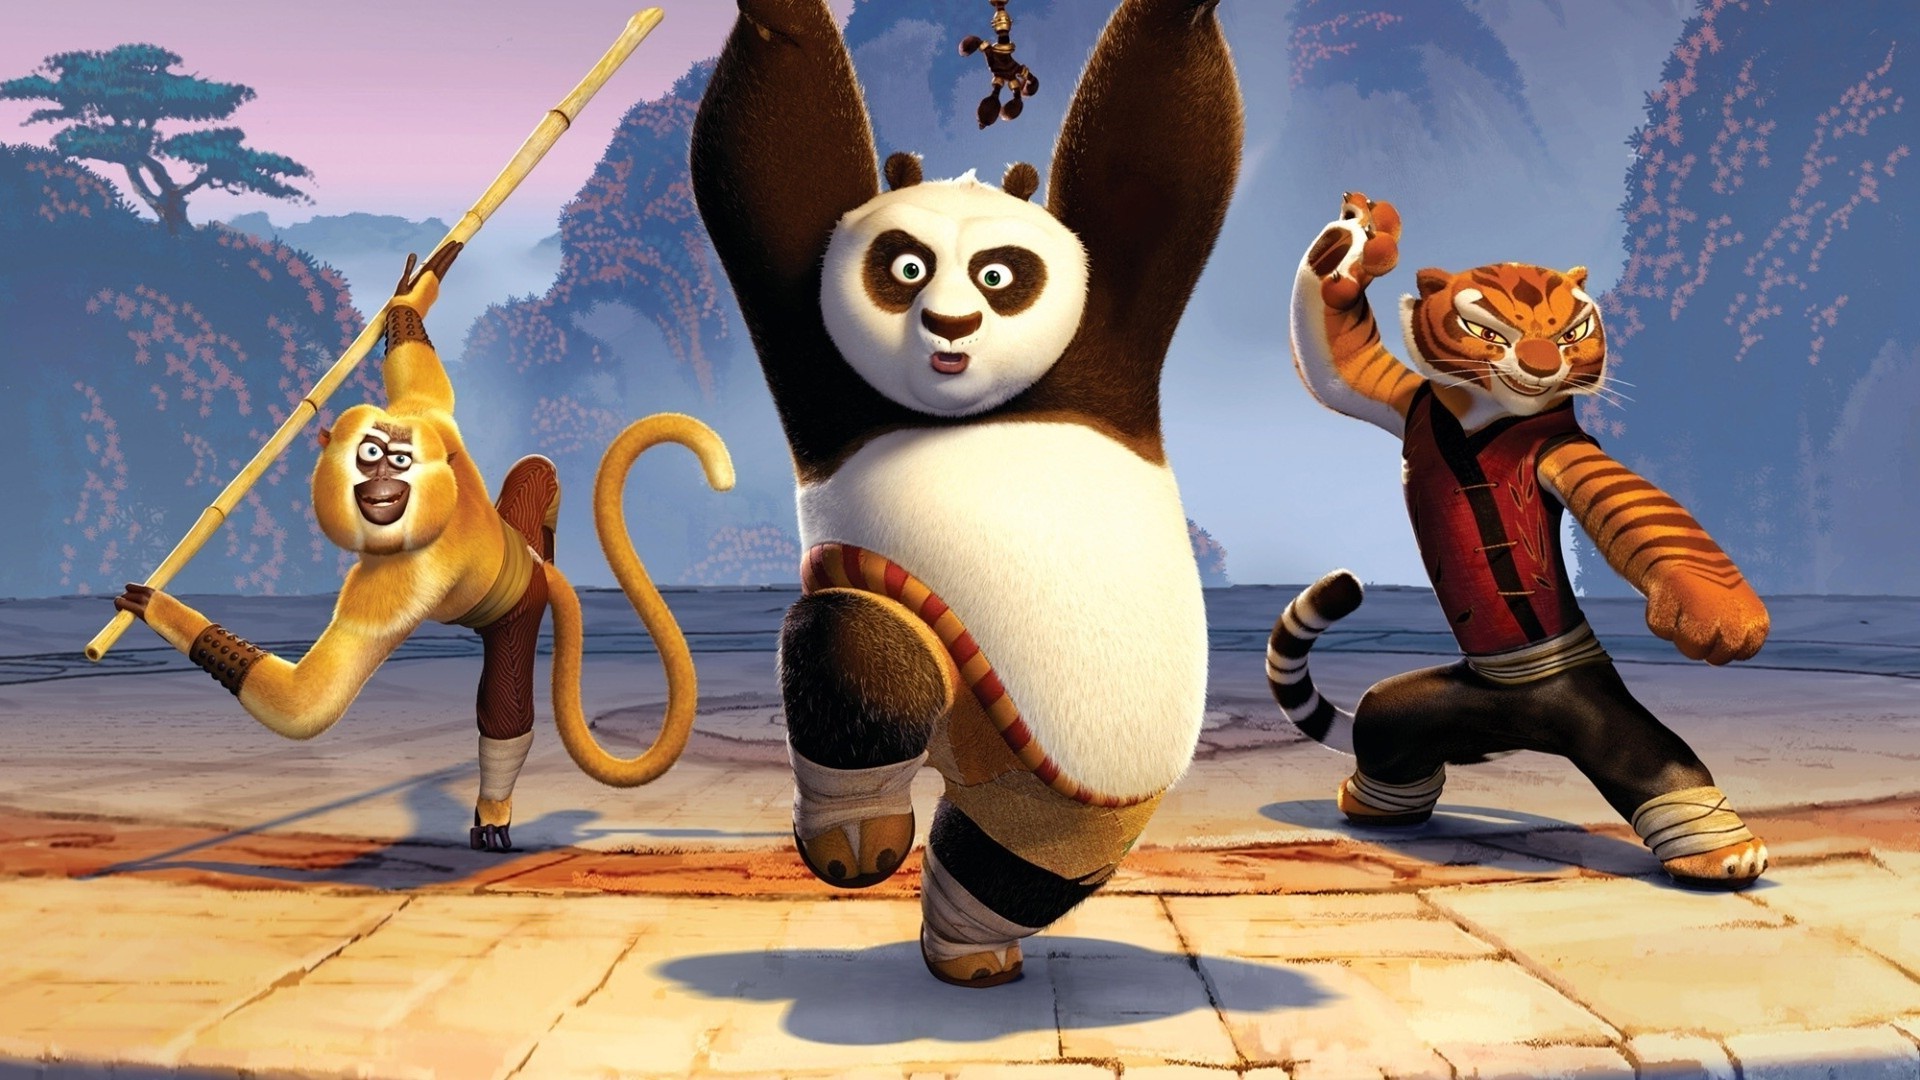 Kung fu panda 1 in hindi full movie download - aviationpase